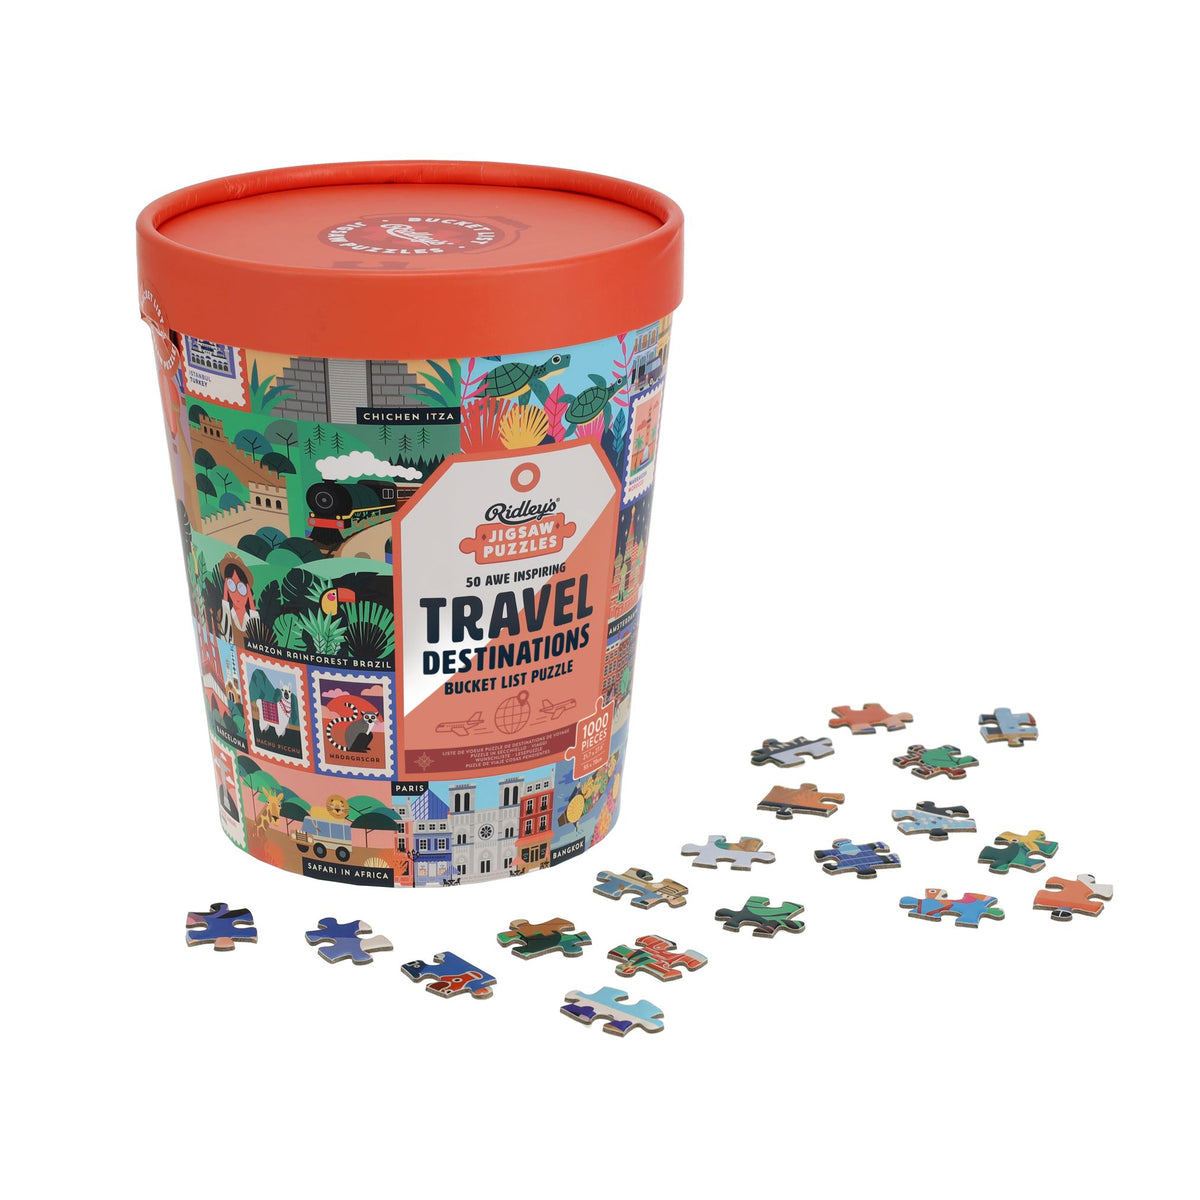 Ridley's Games 50 Awe-Inspiring Travel Destinations Bucket List 1000-Piece Puzzle